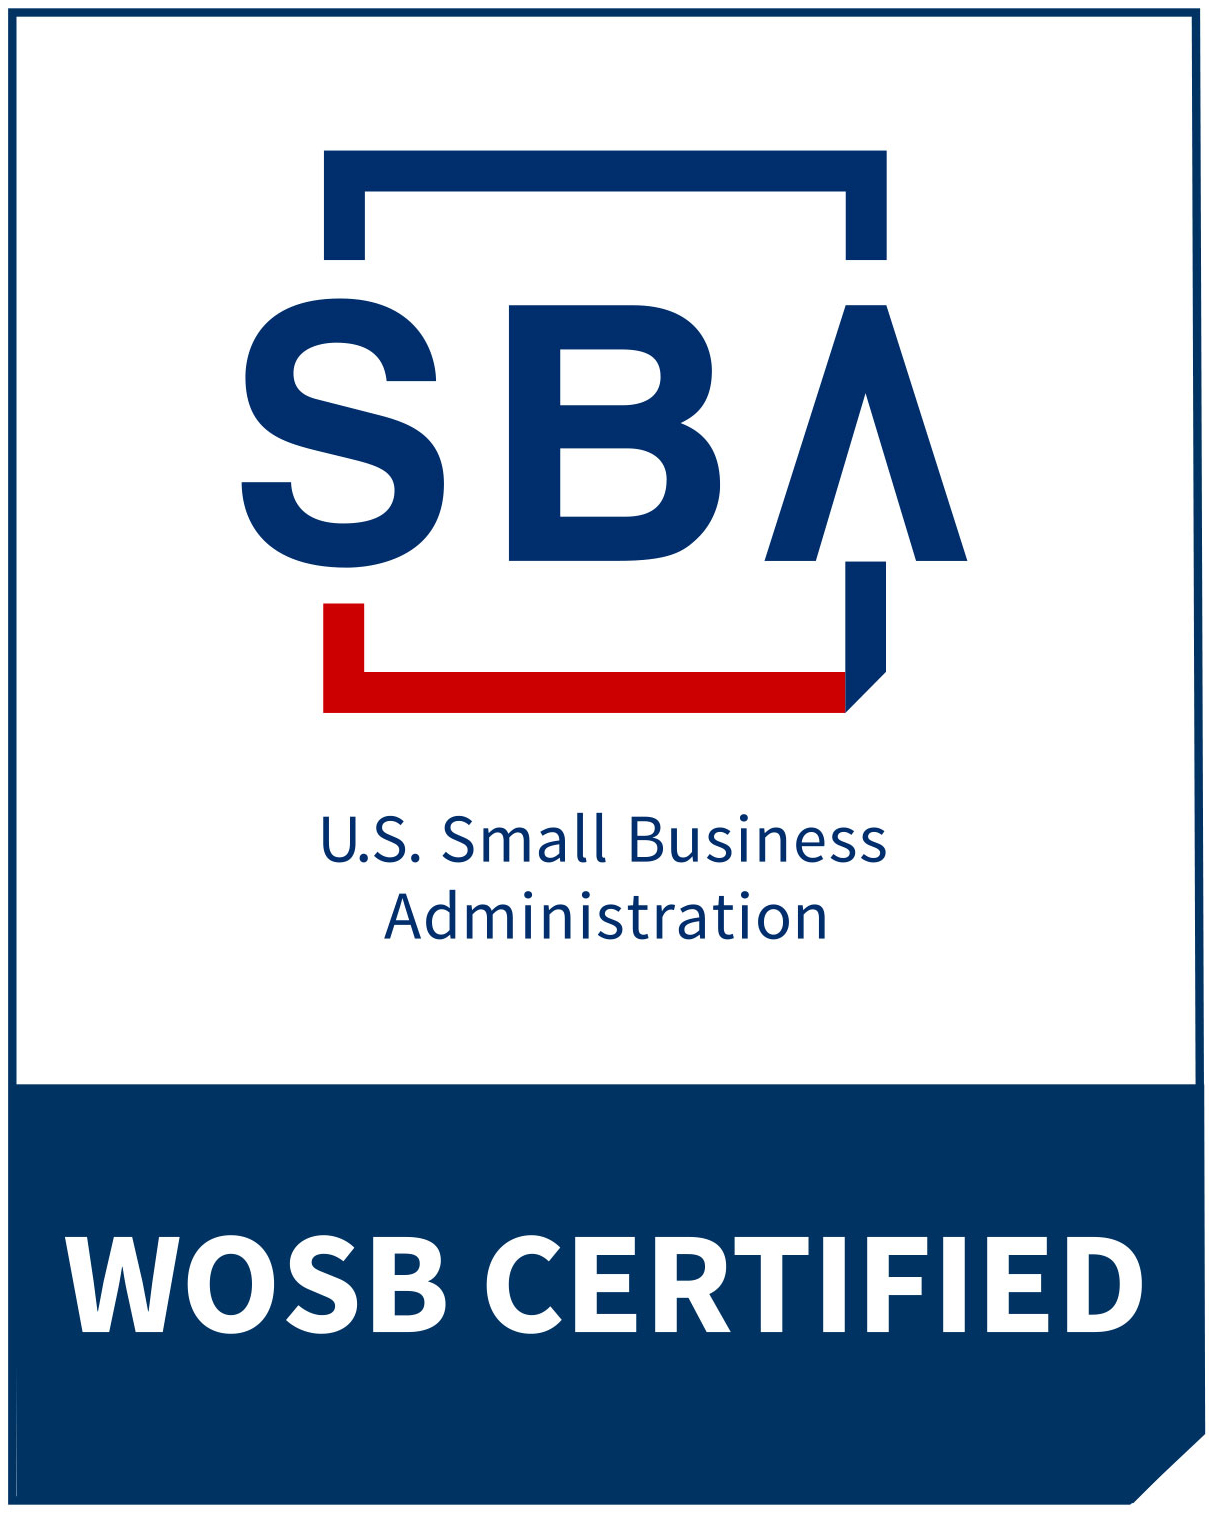 WOSB Certified